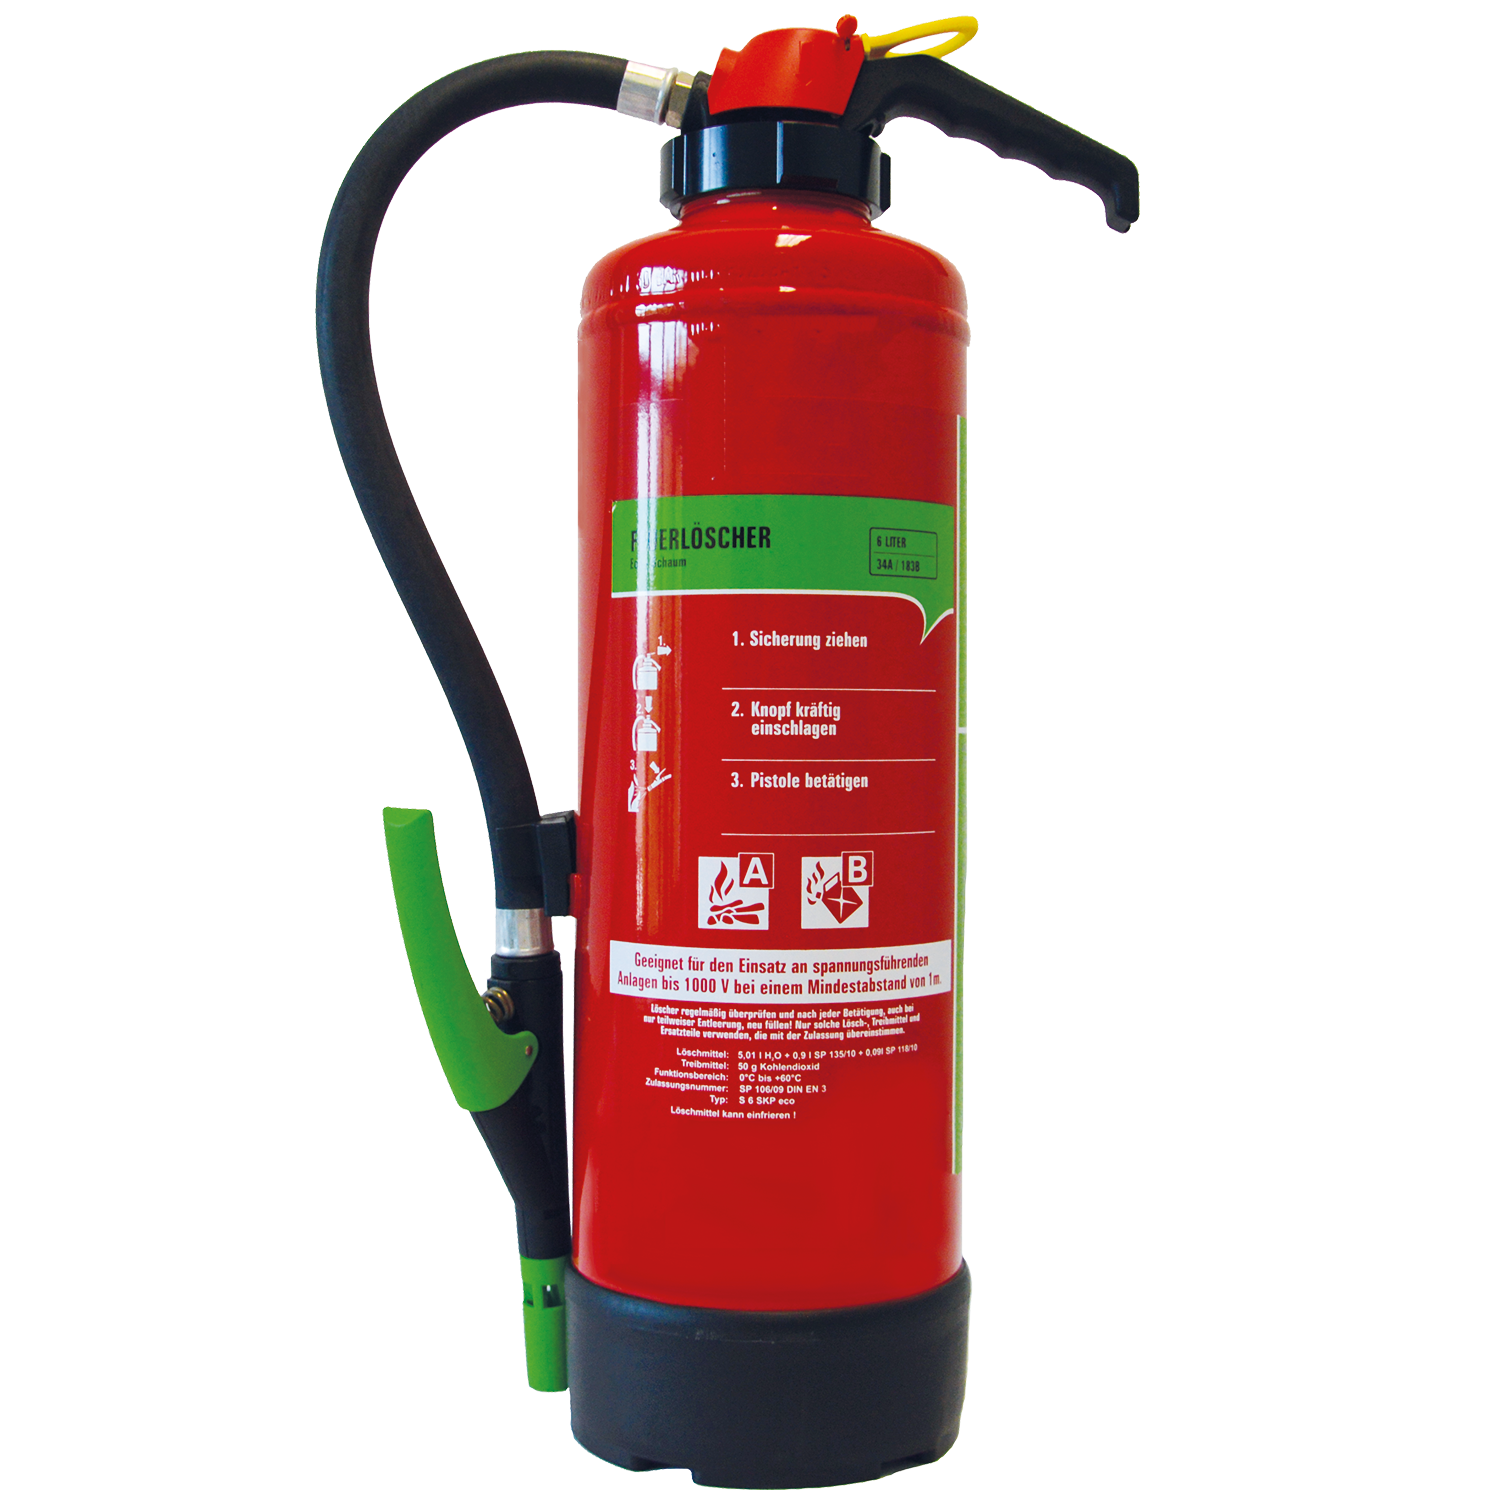 Bio-foam extinguisher